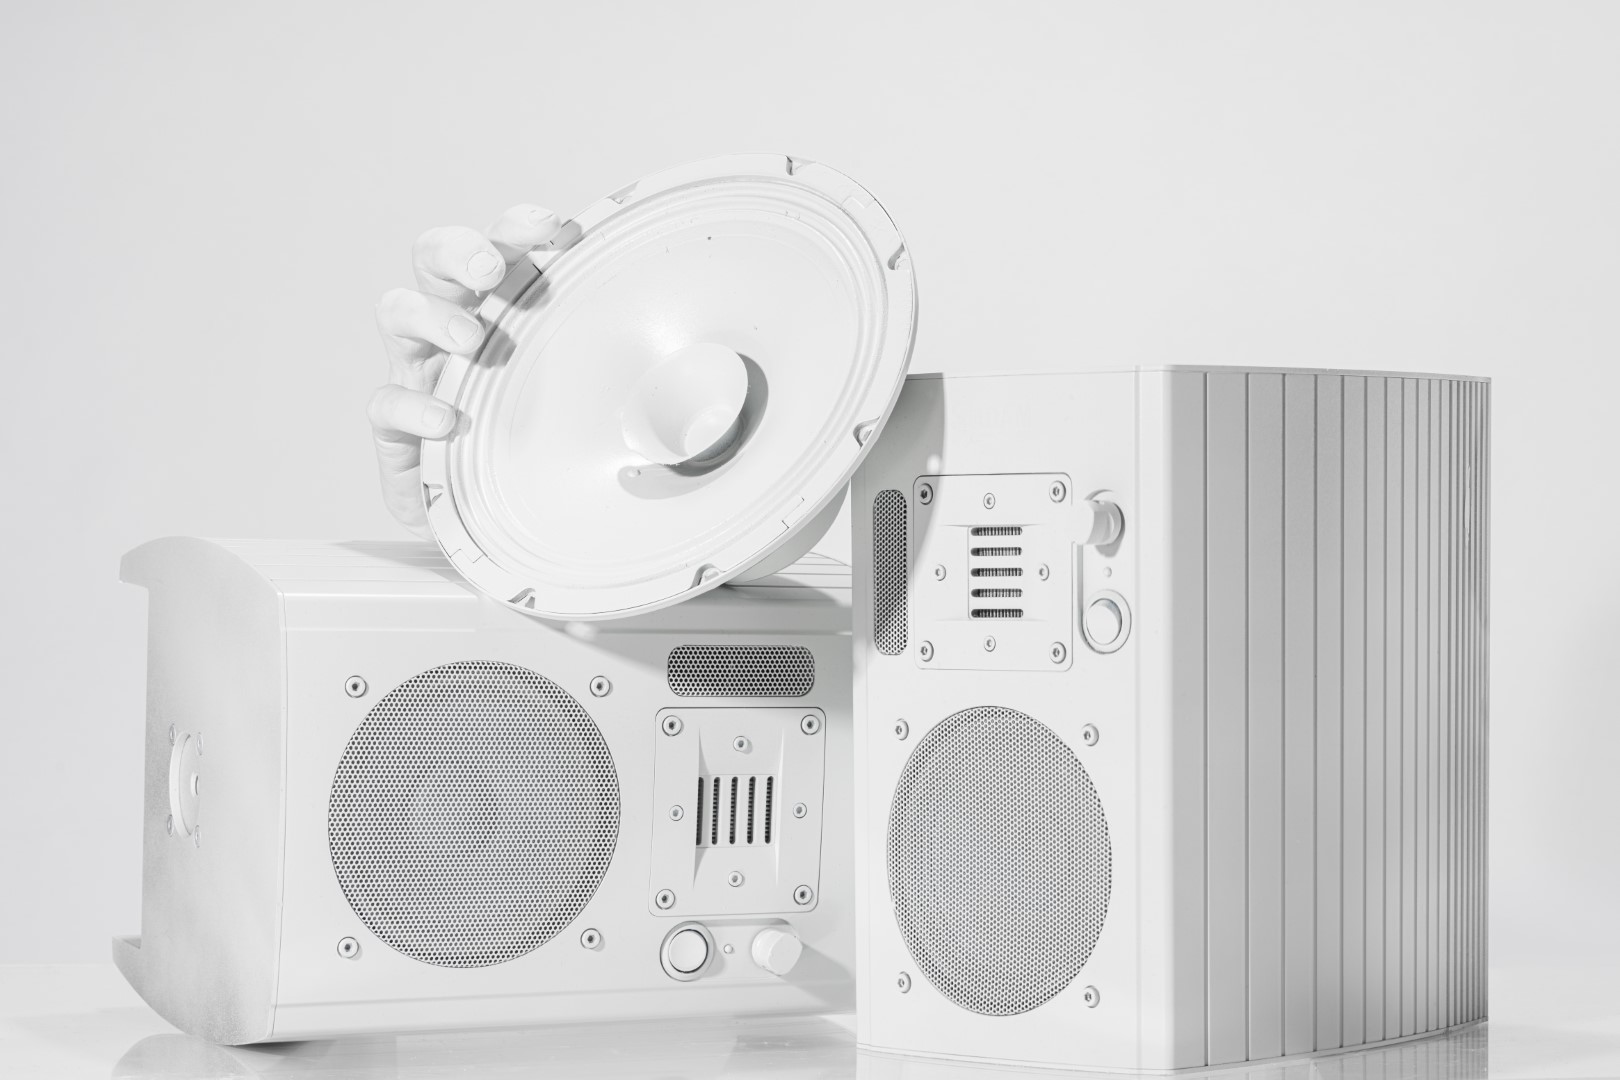 all white product audio equipment for moog audio. studio speaker